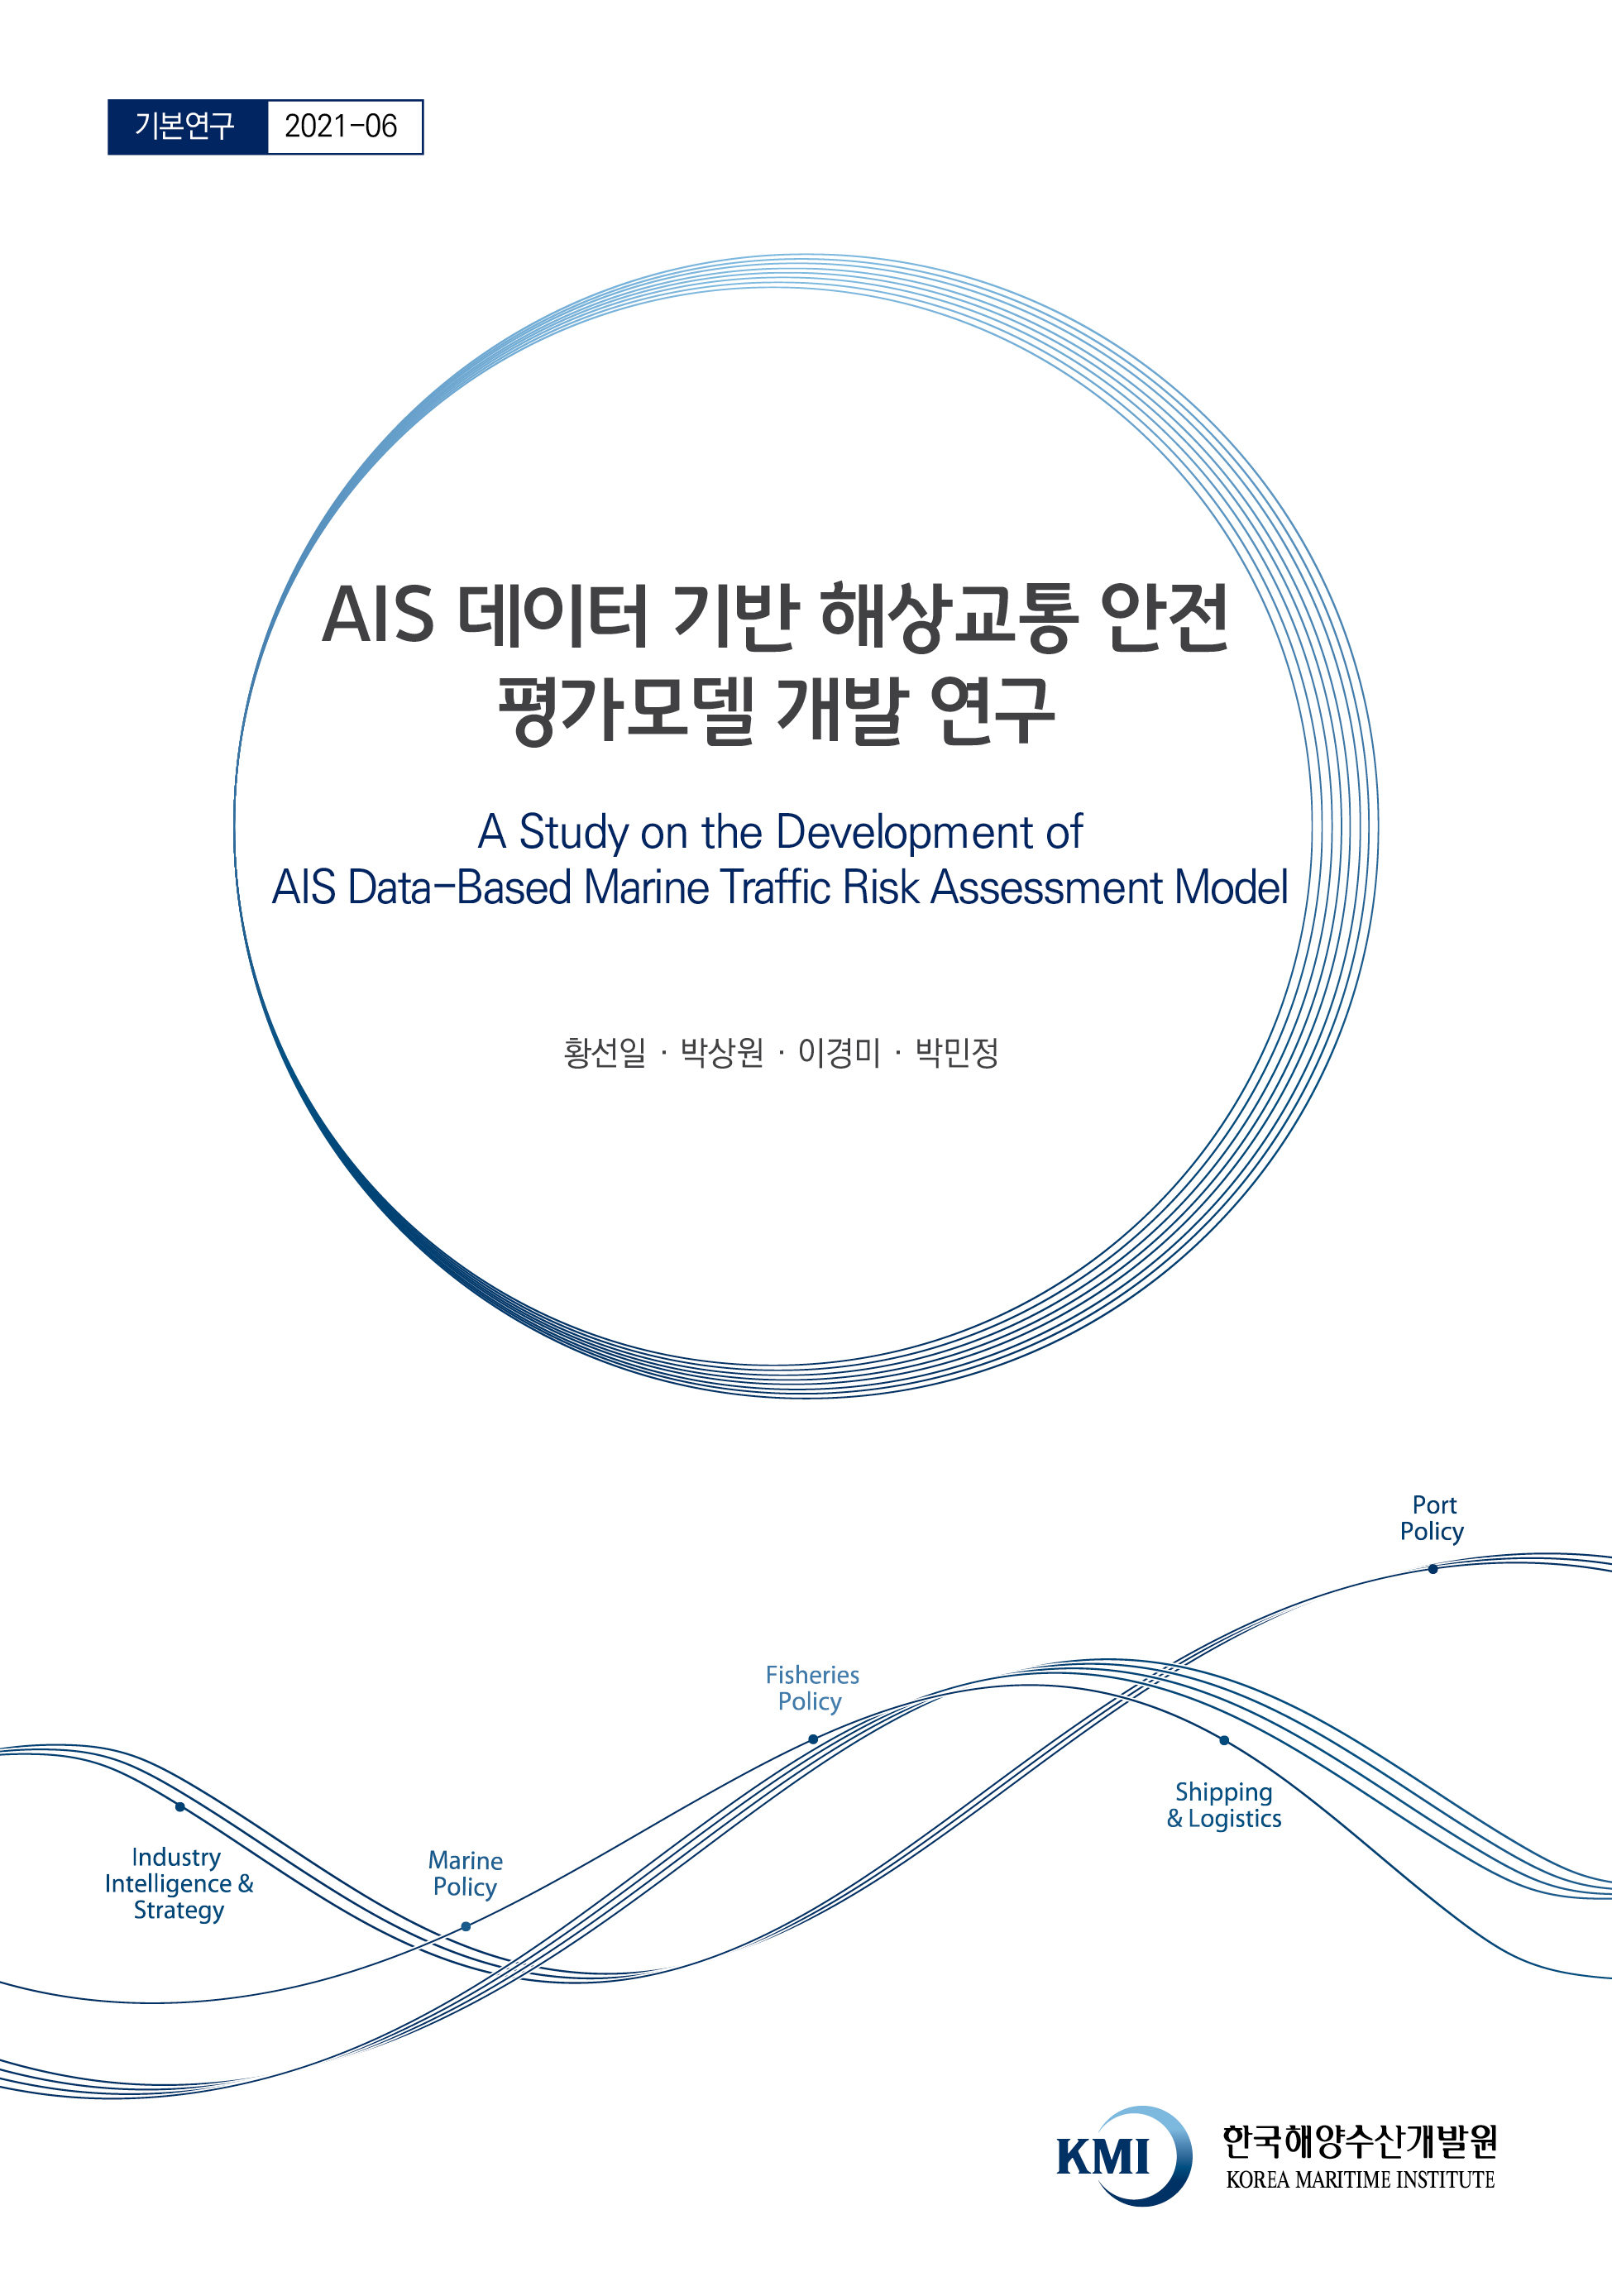 A Study on the Development of AIS Data-Based Marine Traffic Risk Assessment Model